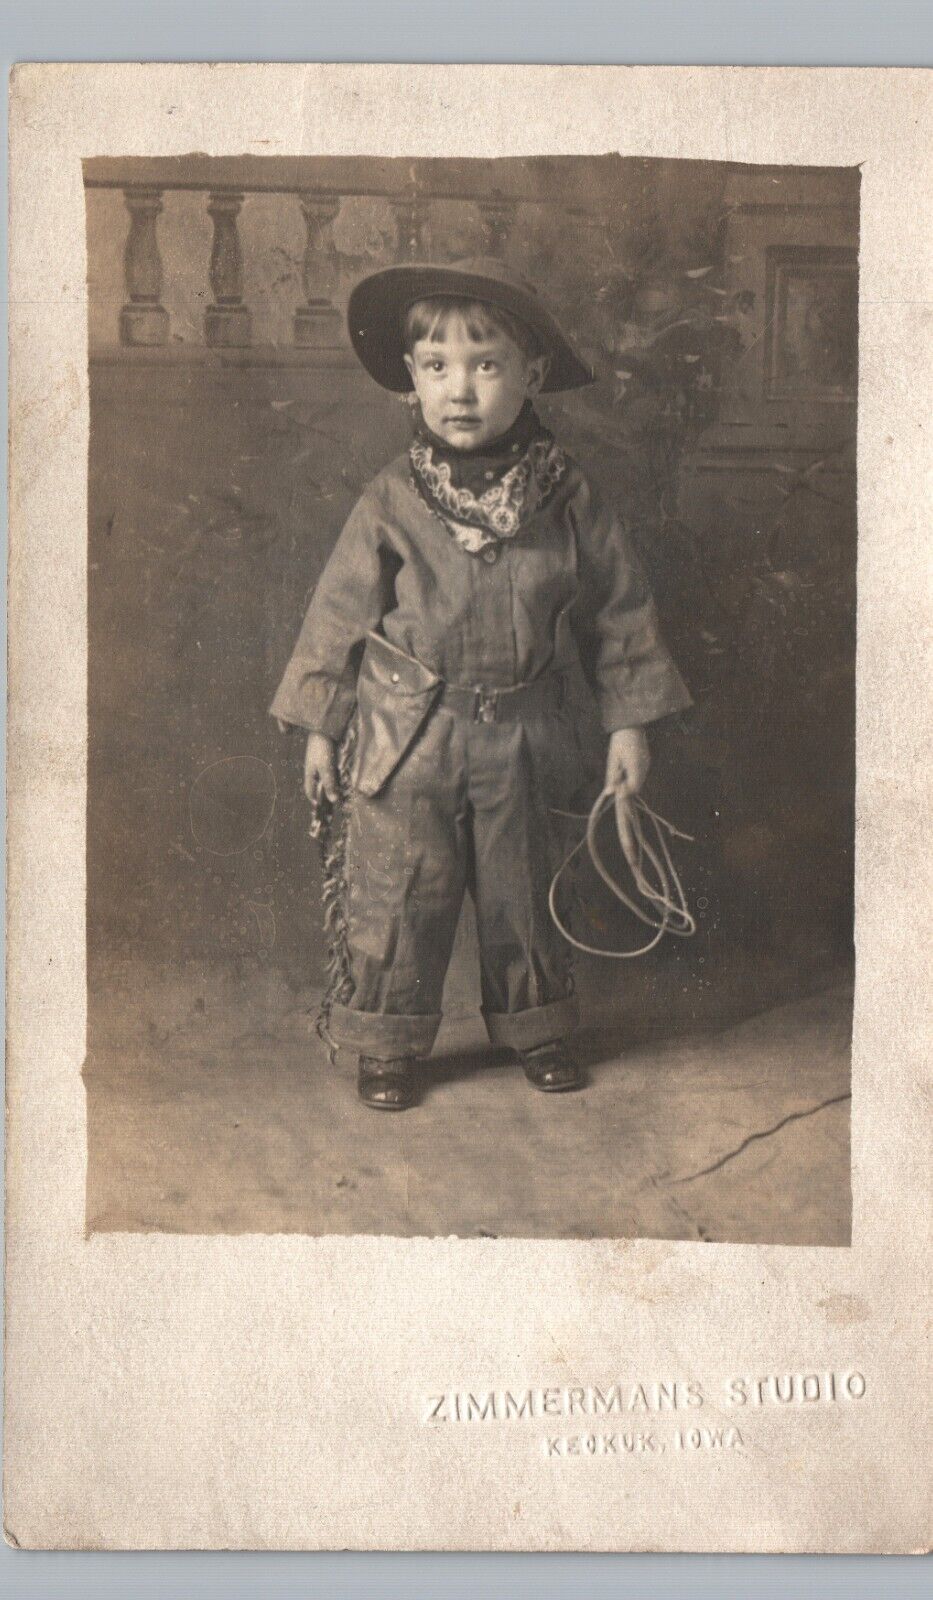 LITTLE BOY COWBOY COSTUME keokuk ia real photo postcard rppc iowa scout portrait